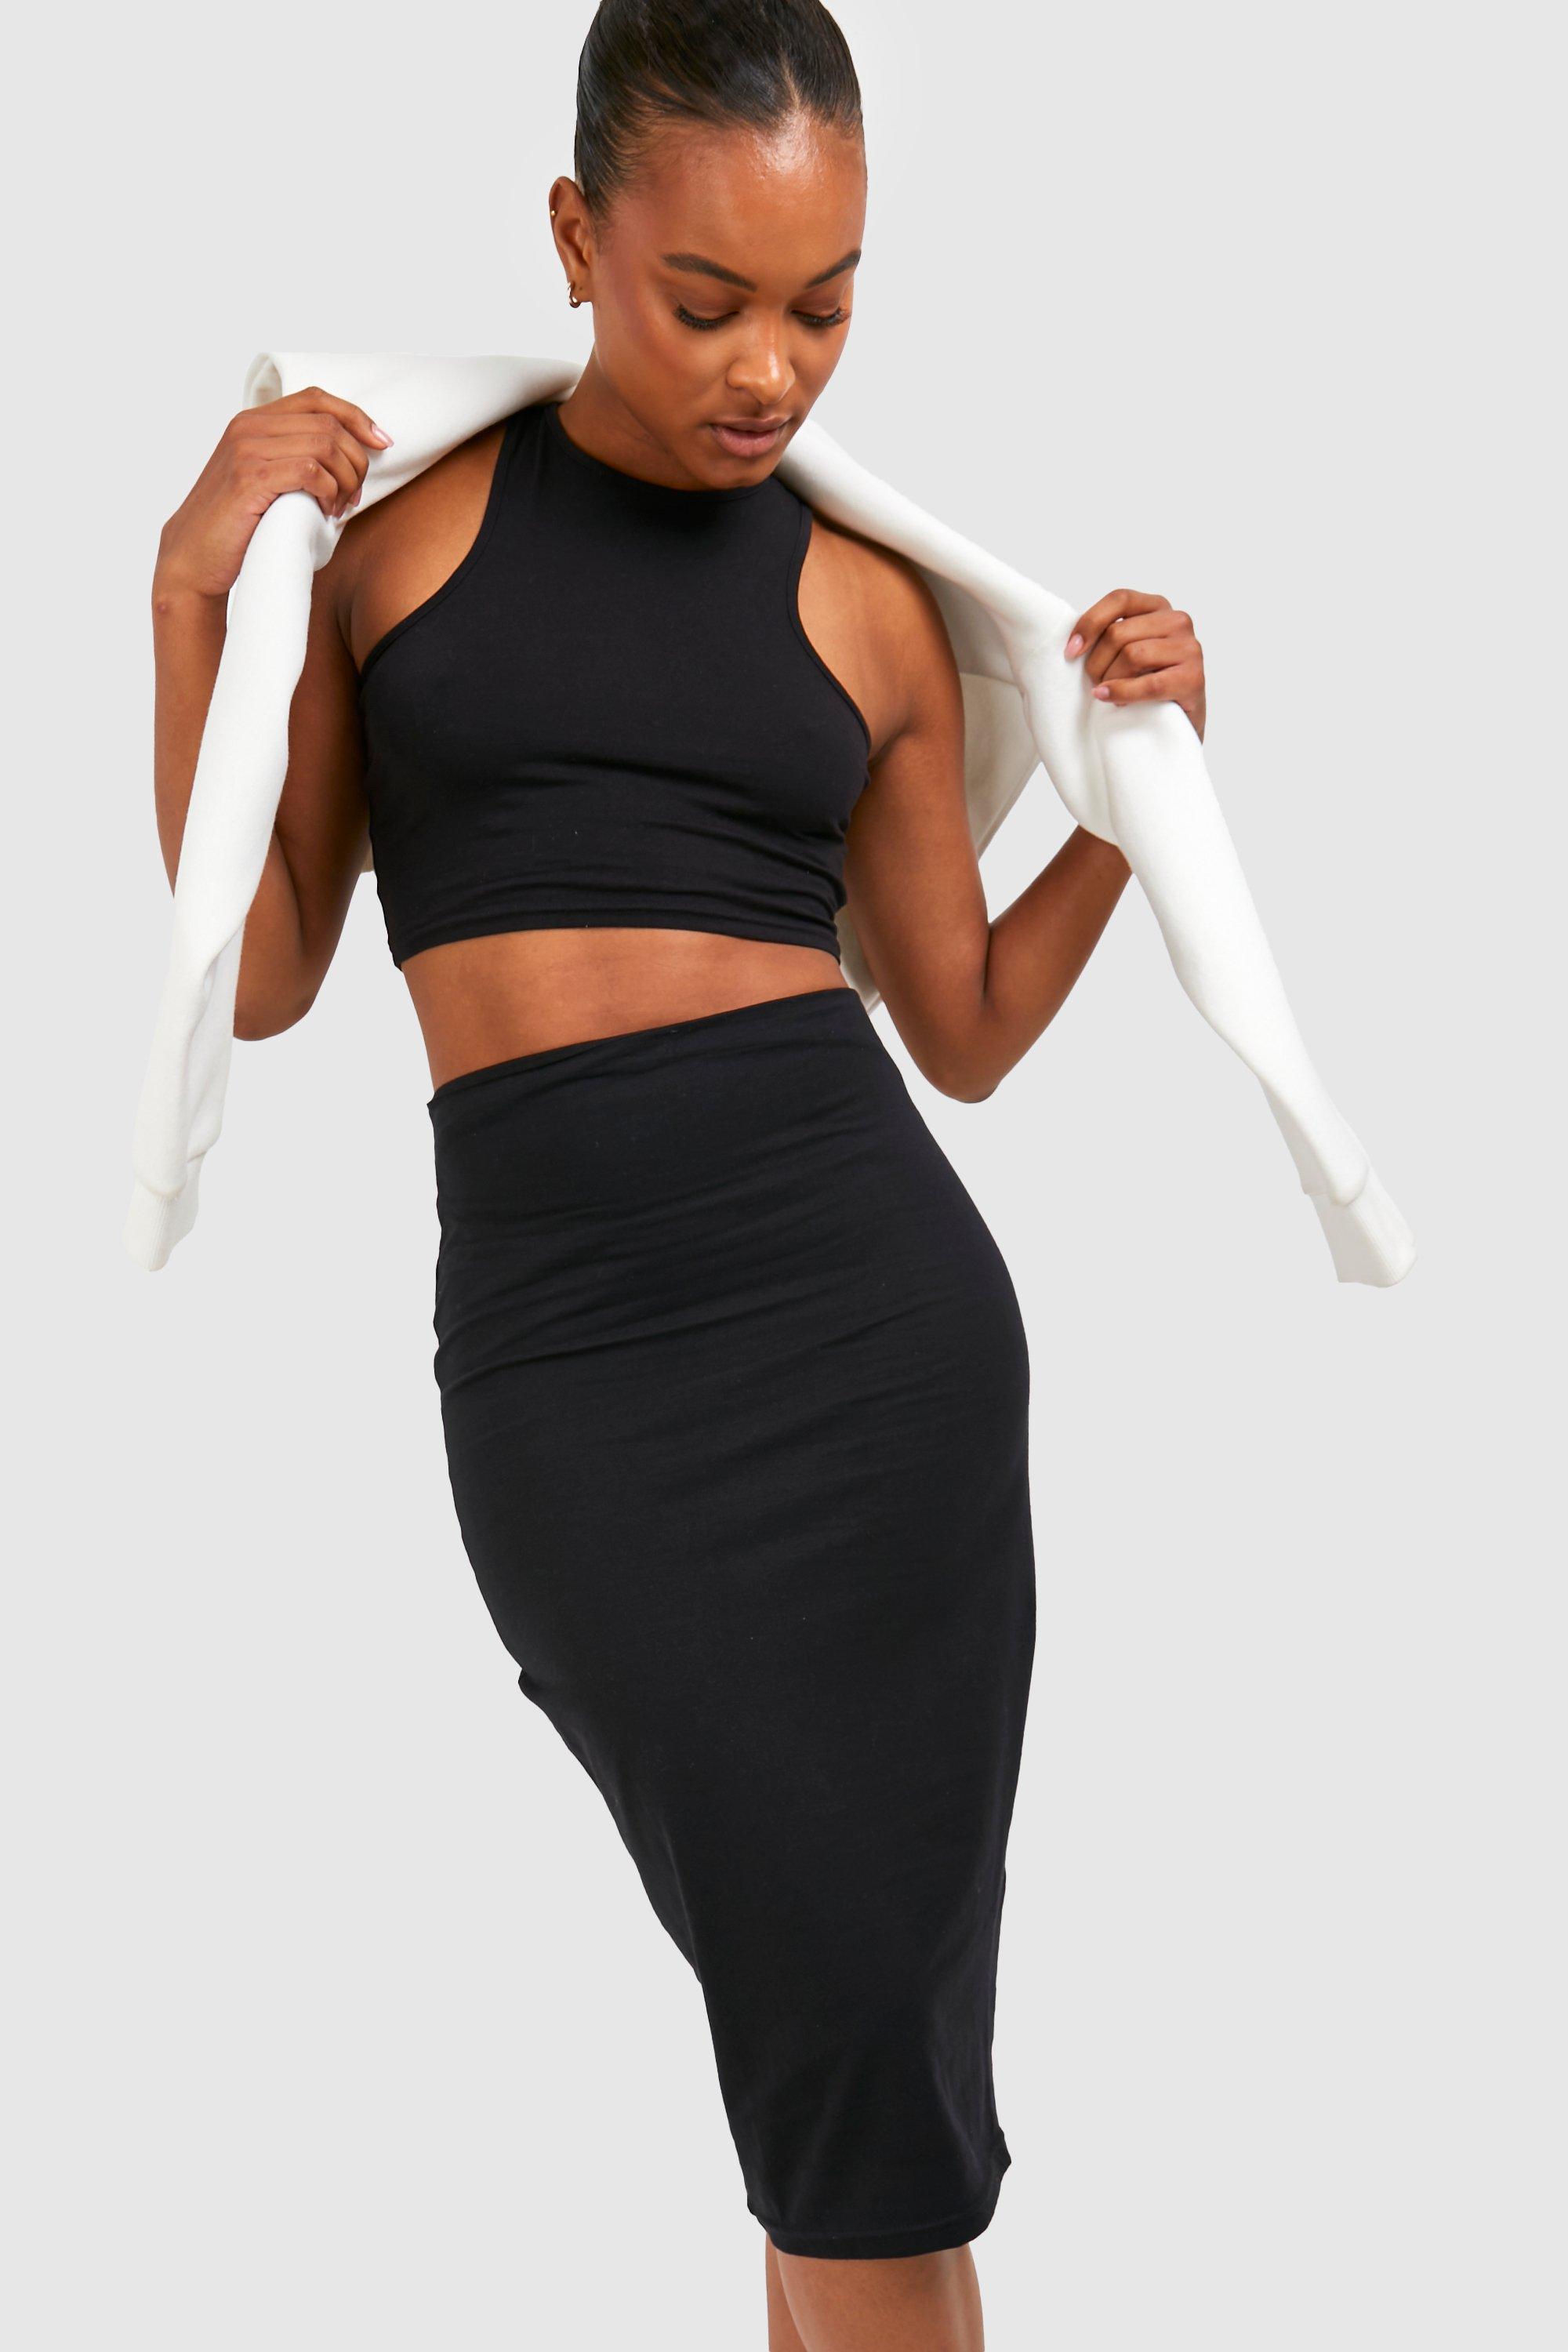 wybzd Women's Two Piece Maxi Skirts Outfits Tube Bra Crop Top High Slit  Bodycon Long Skirt Set Black L